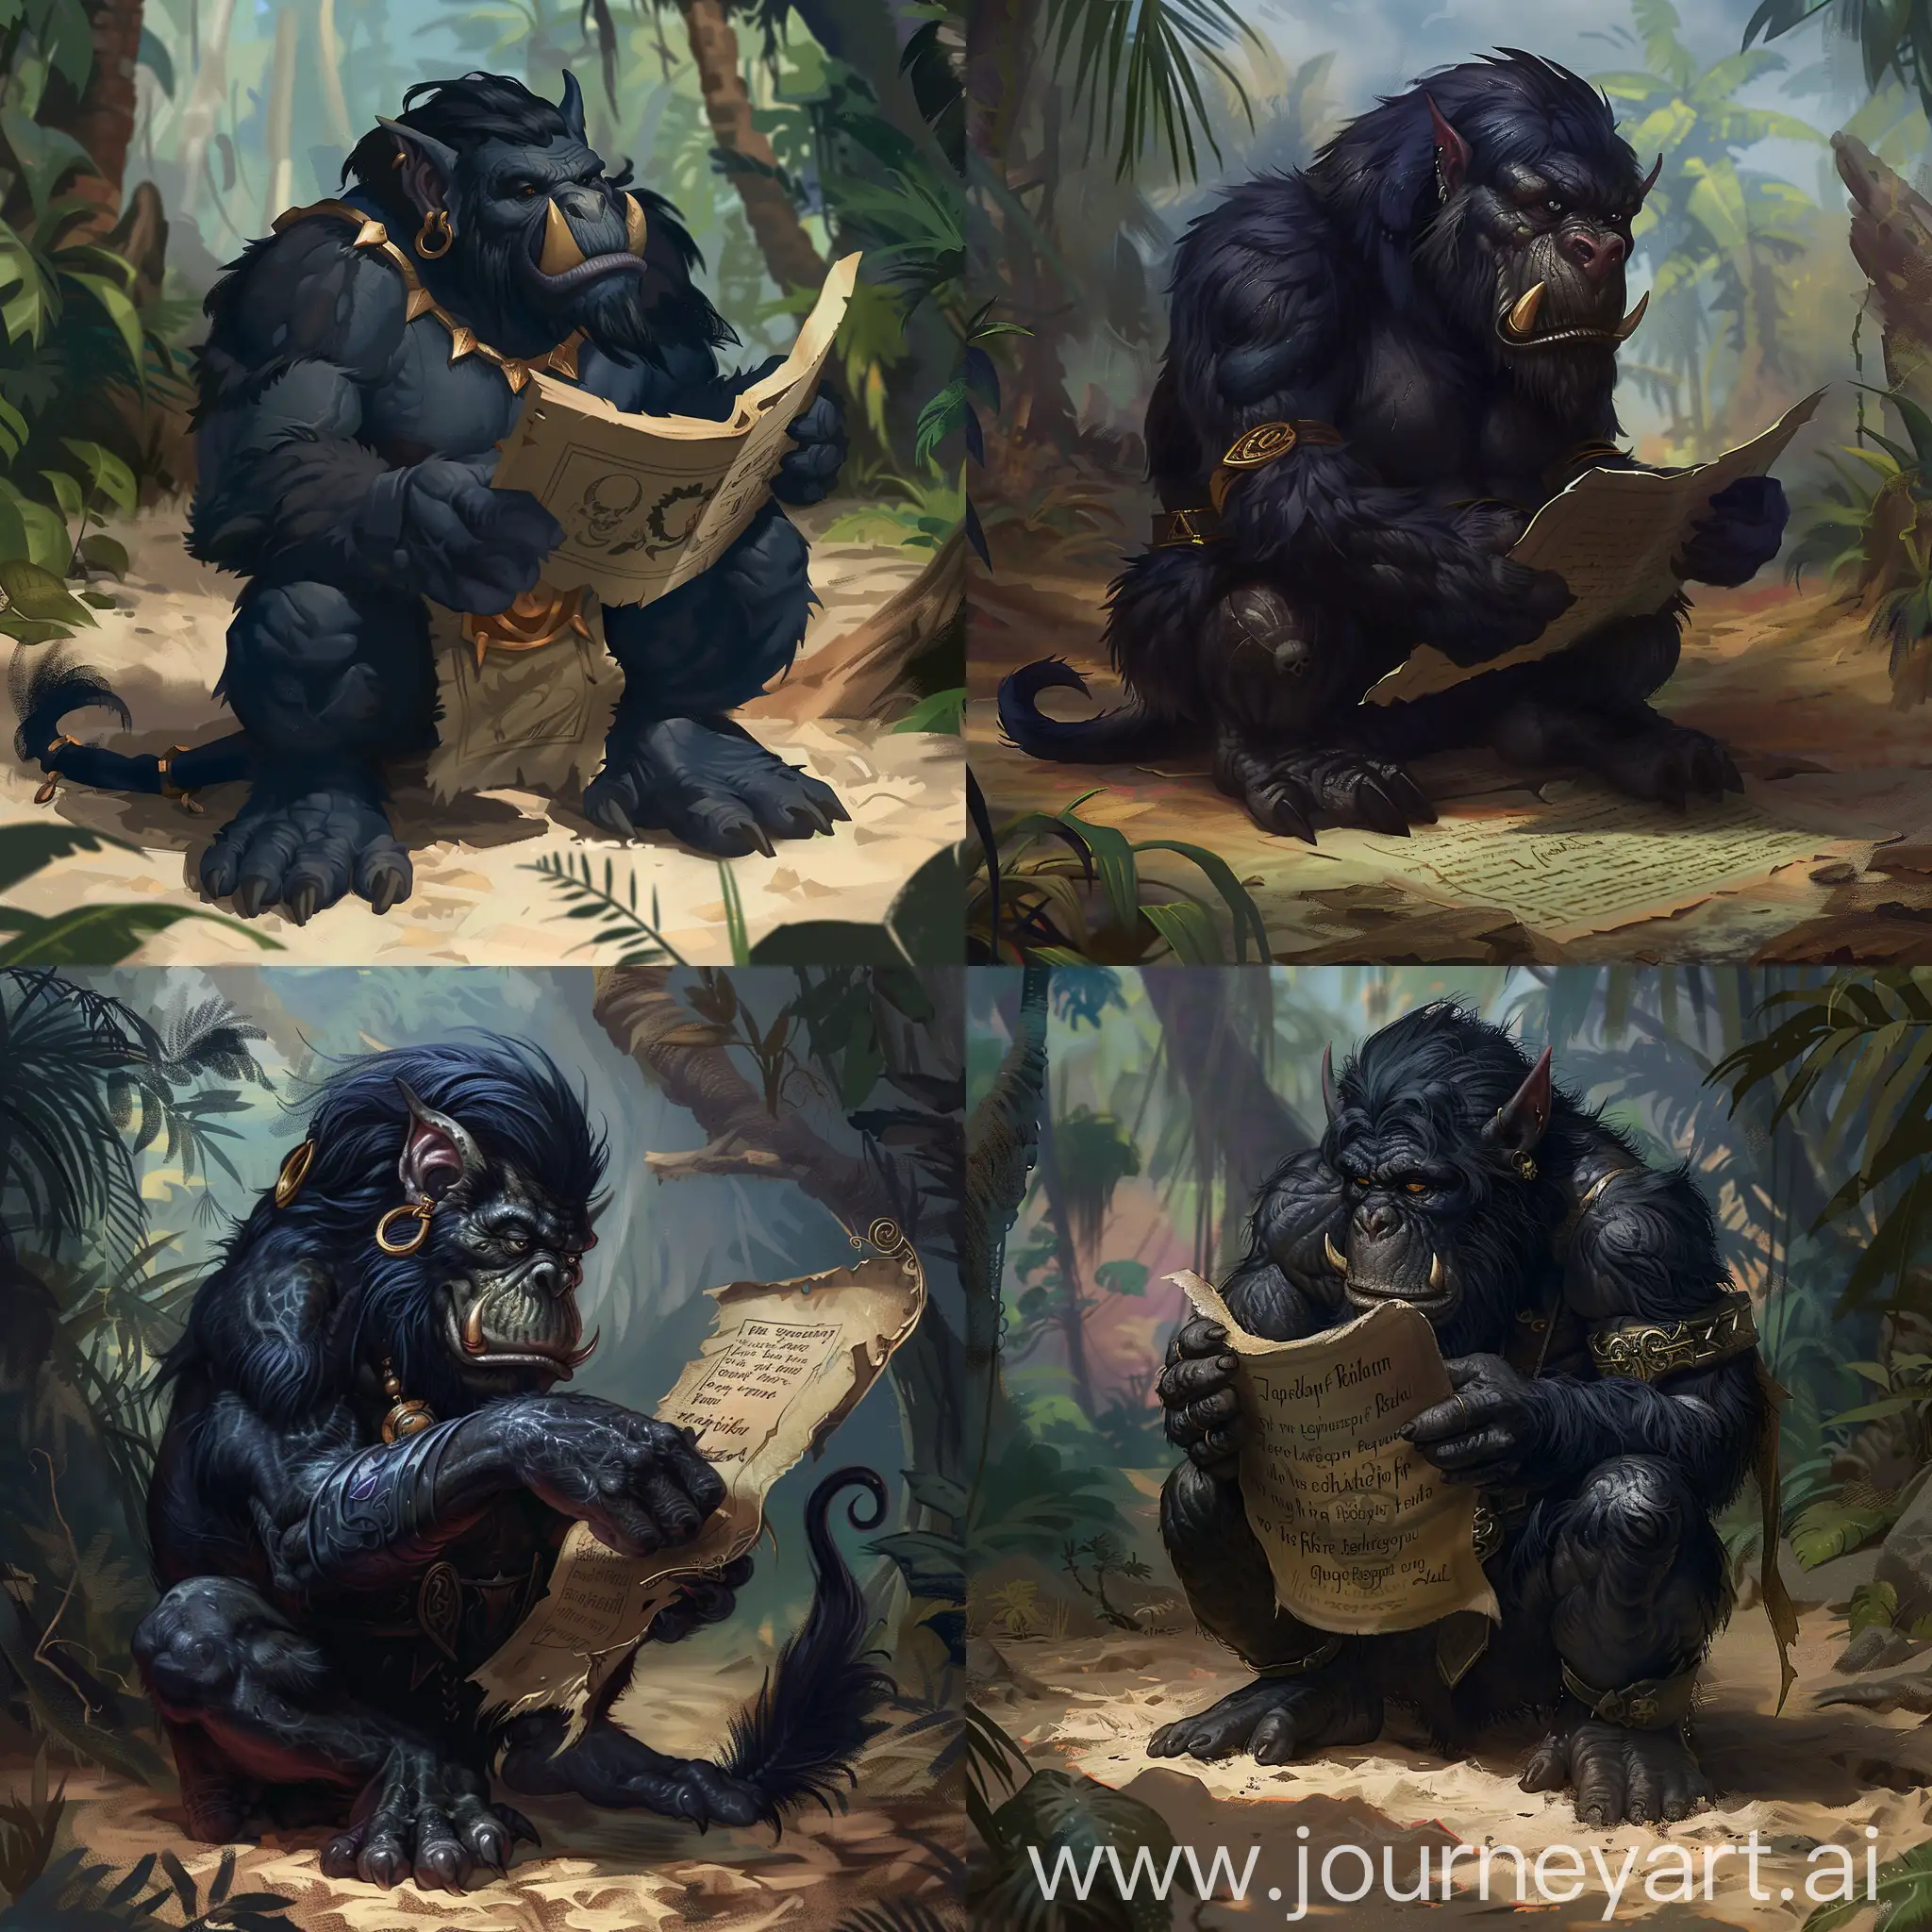 Zandalari-Black-Troll-Reading-Scroll-in-Jungle-Setting